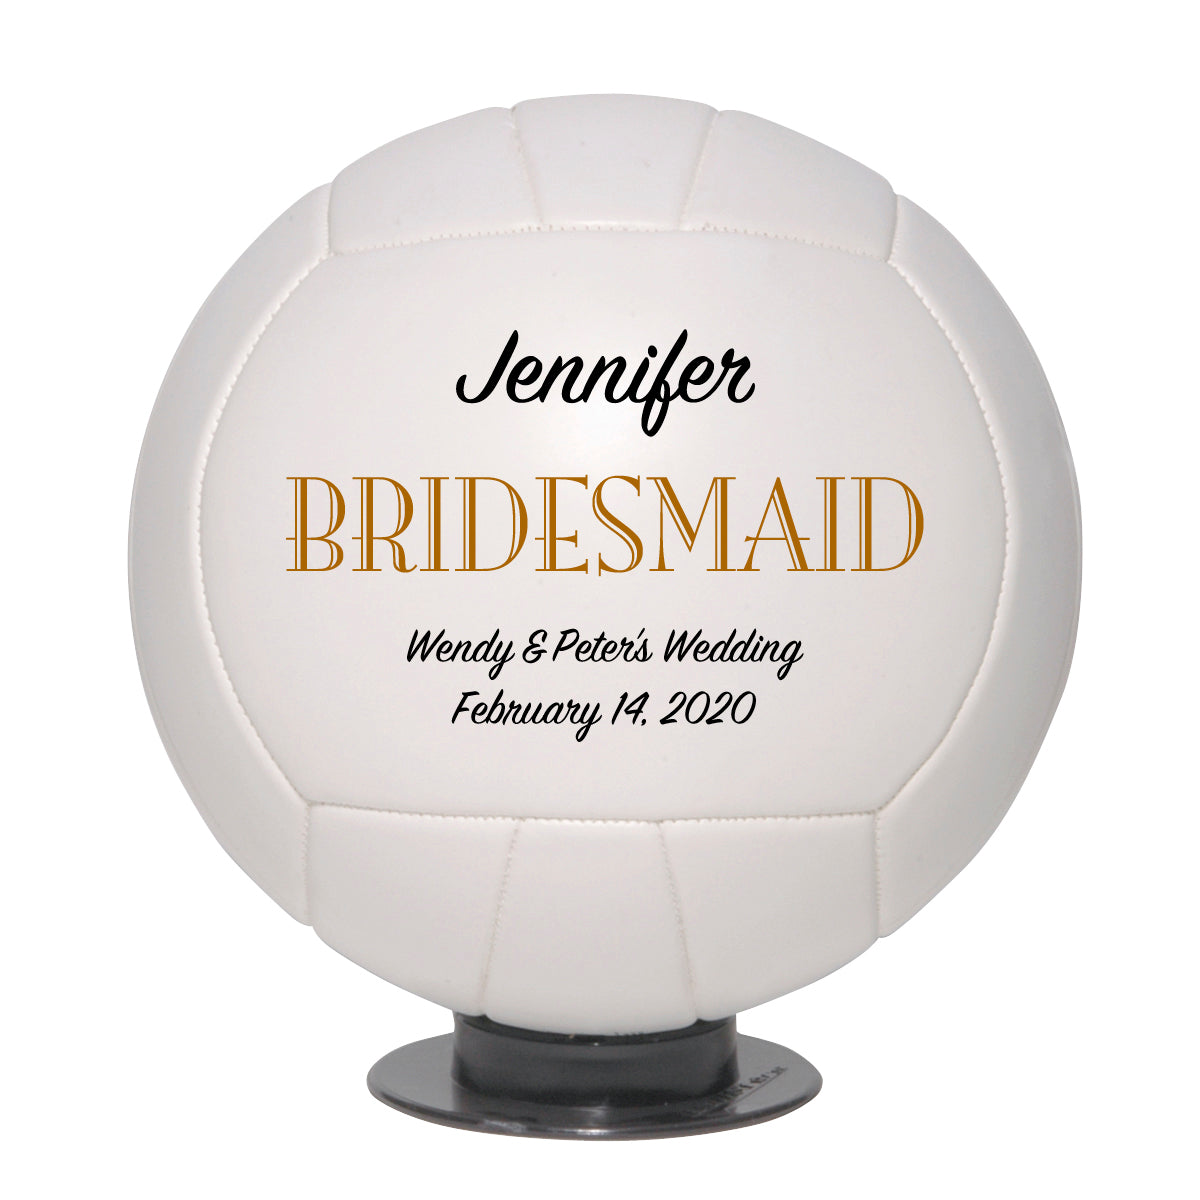 Personalized Wedding Volleyball Keepsake - Best Man - Ring Bearer - Groomsman Gifts